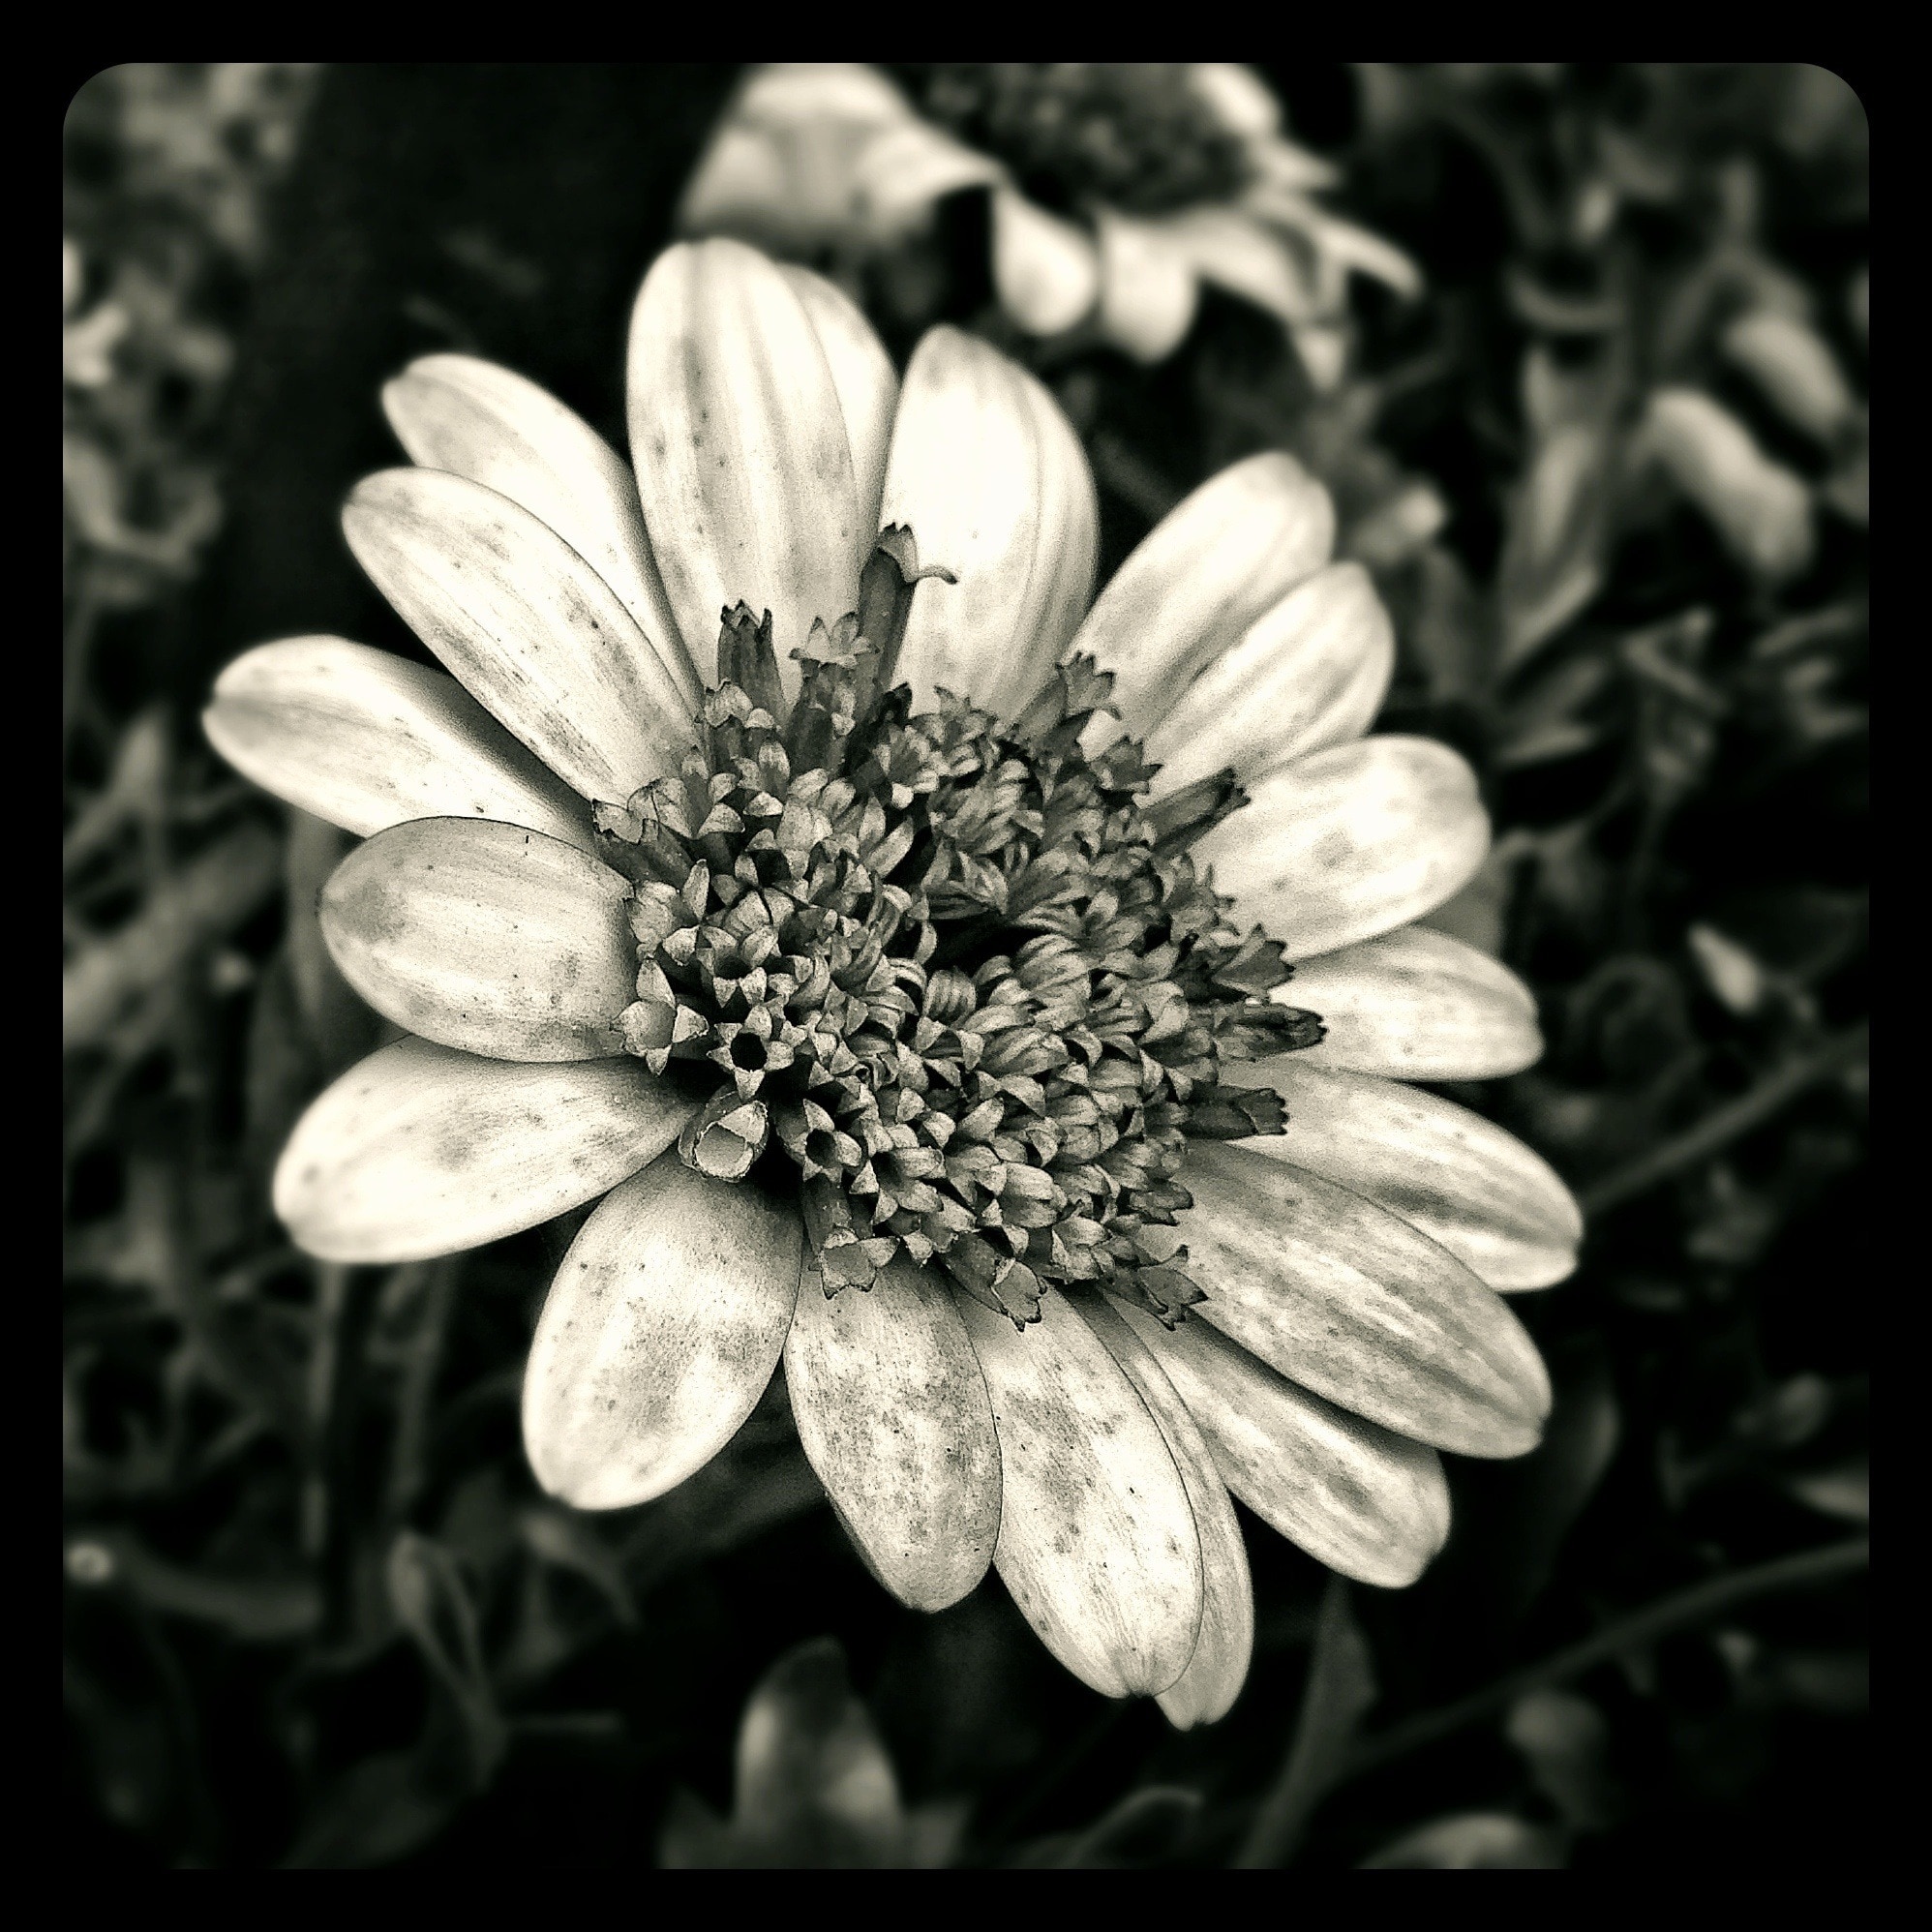 flower grey scale photo